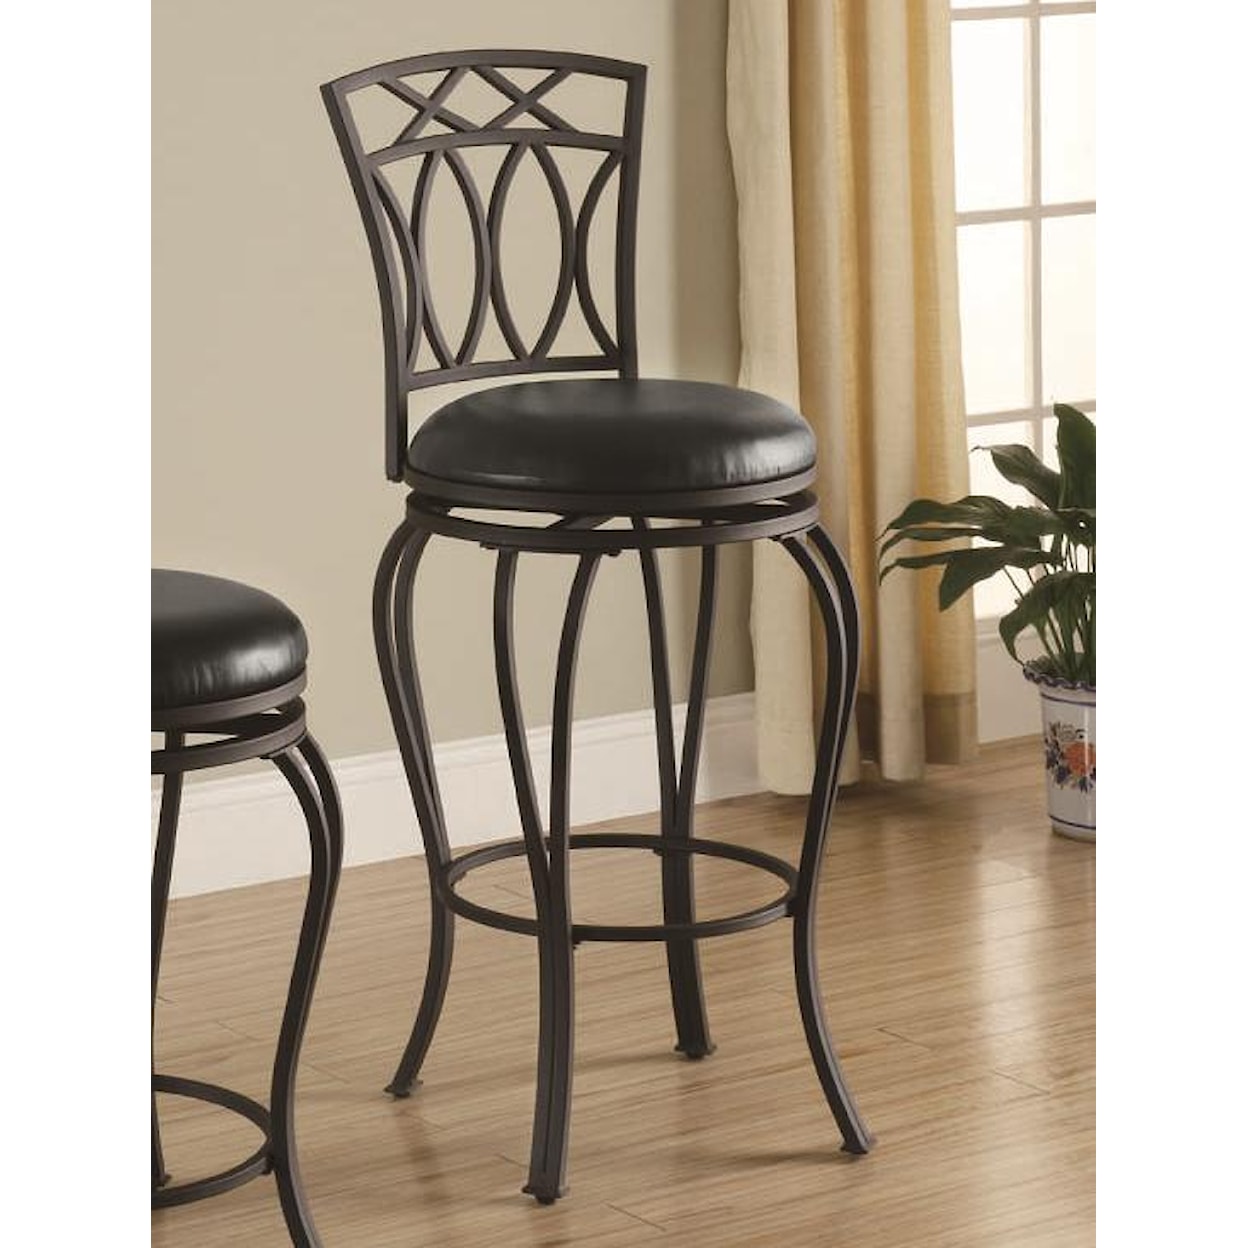 Coaster Dining Chairs and Bar Stools 29" Barstool